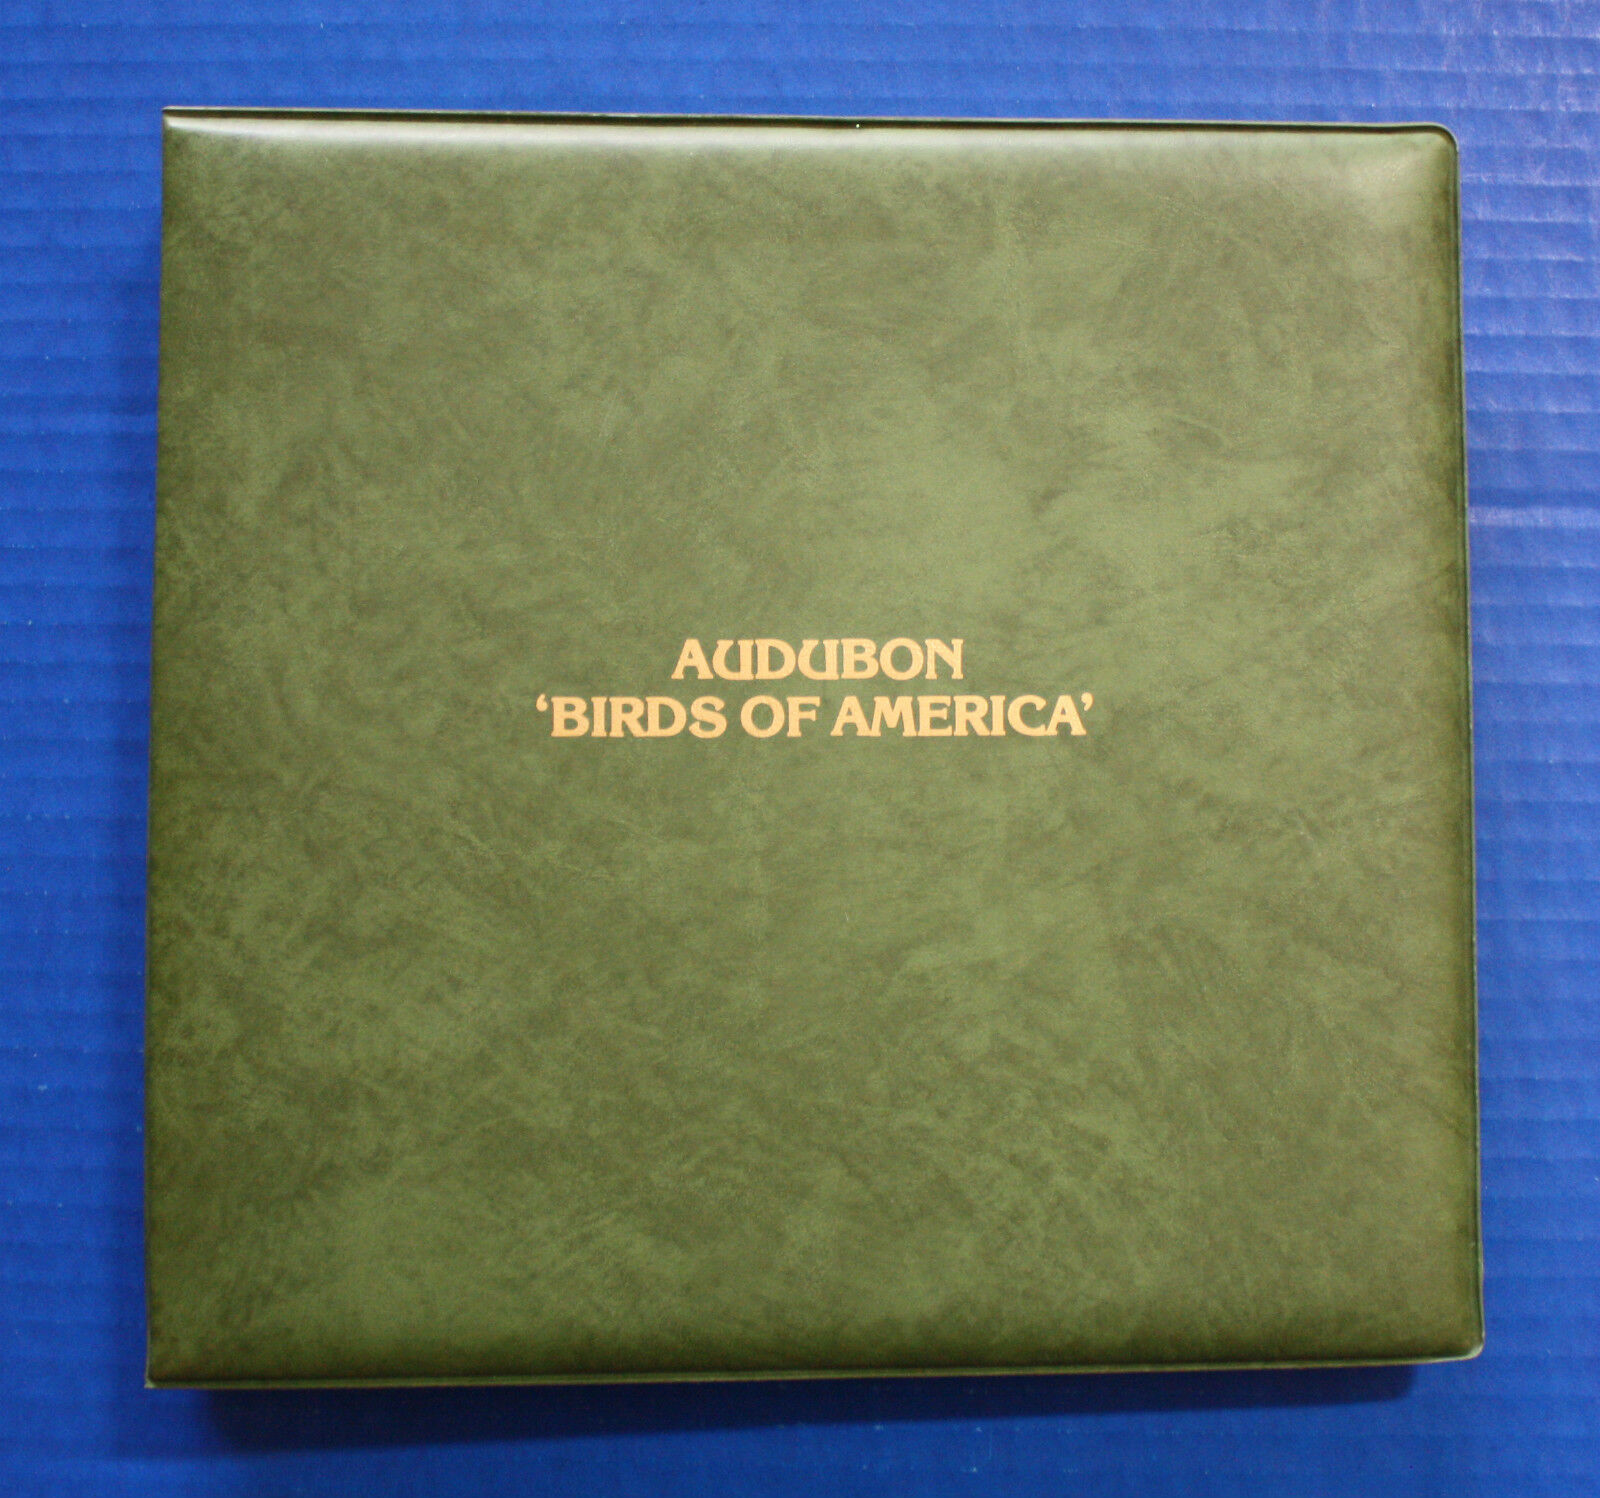 Haiti - 1979 Audubon "Birds of America" Limited Edition MNH sheet set Без бренда